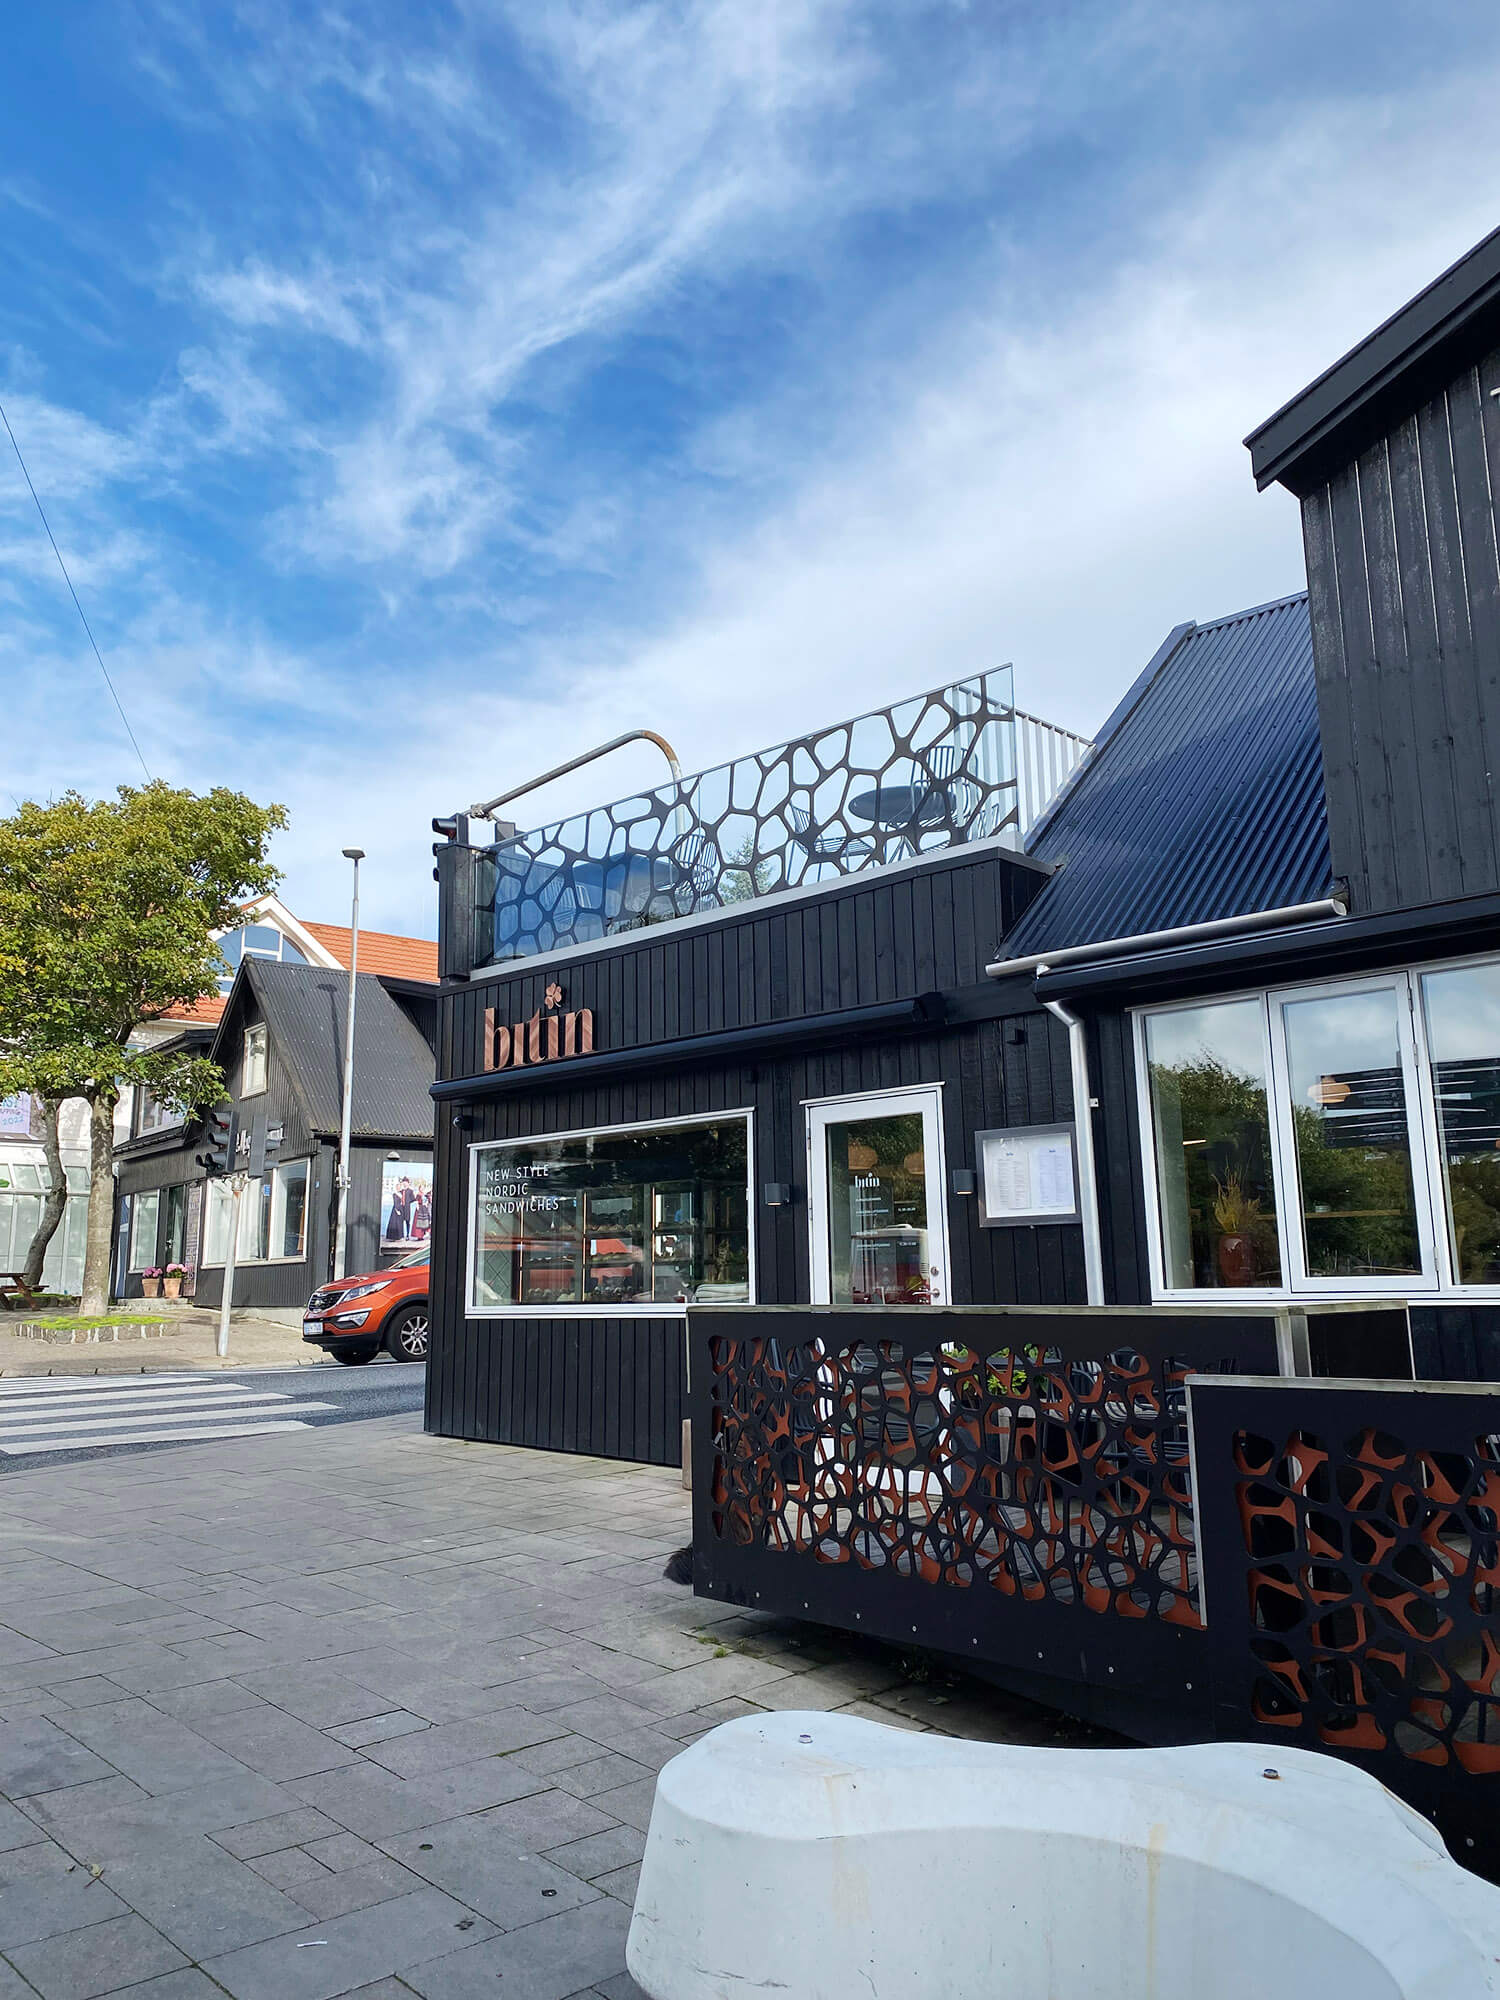 Lunch at Bitin in Tórshavn, Faroe Islands Blog